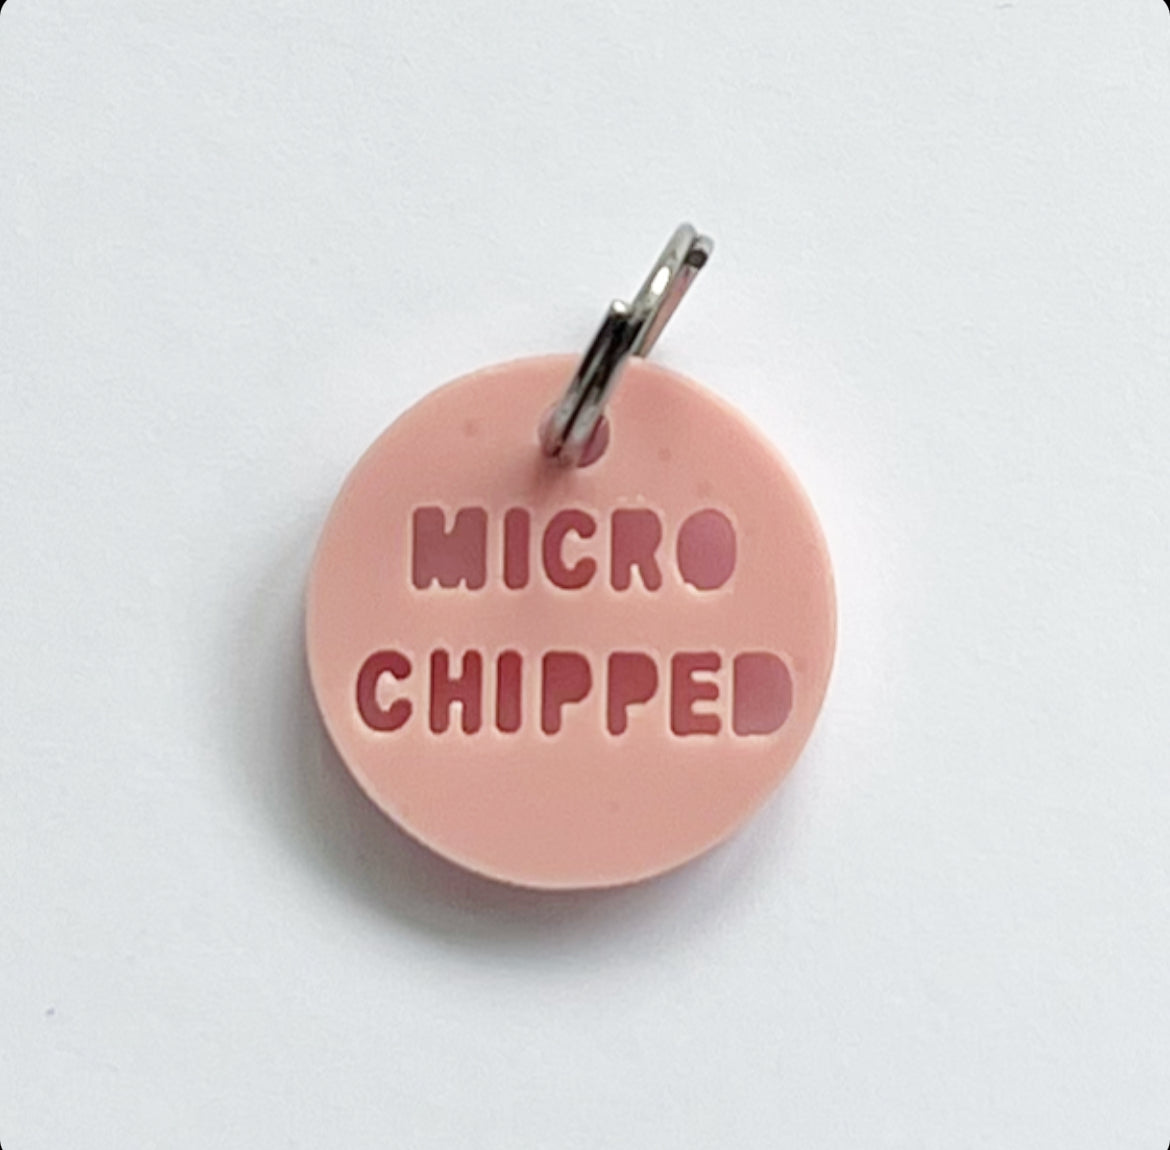 Mini ‘Microchipped’ acrylic charm add-on